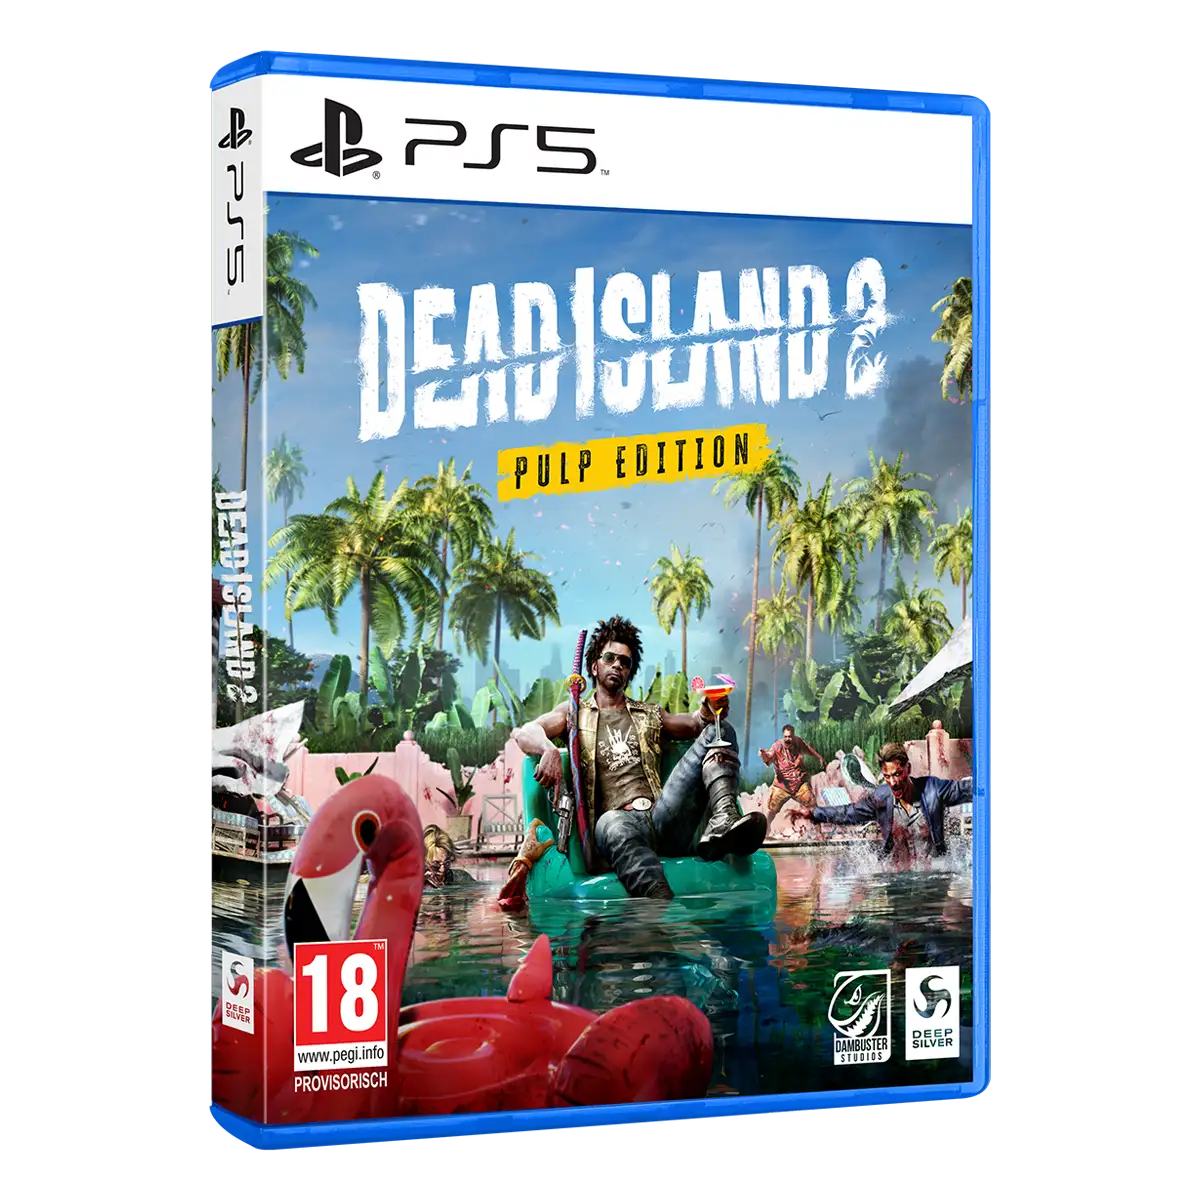 Dead Island 2 PULP Edition (PS5) (PEGI) Image 2